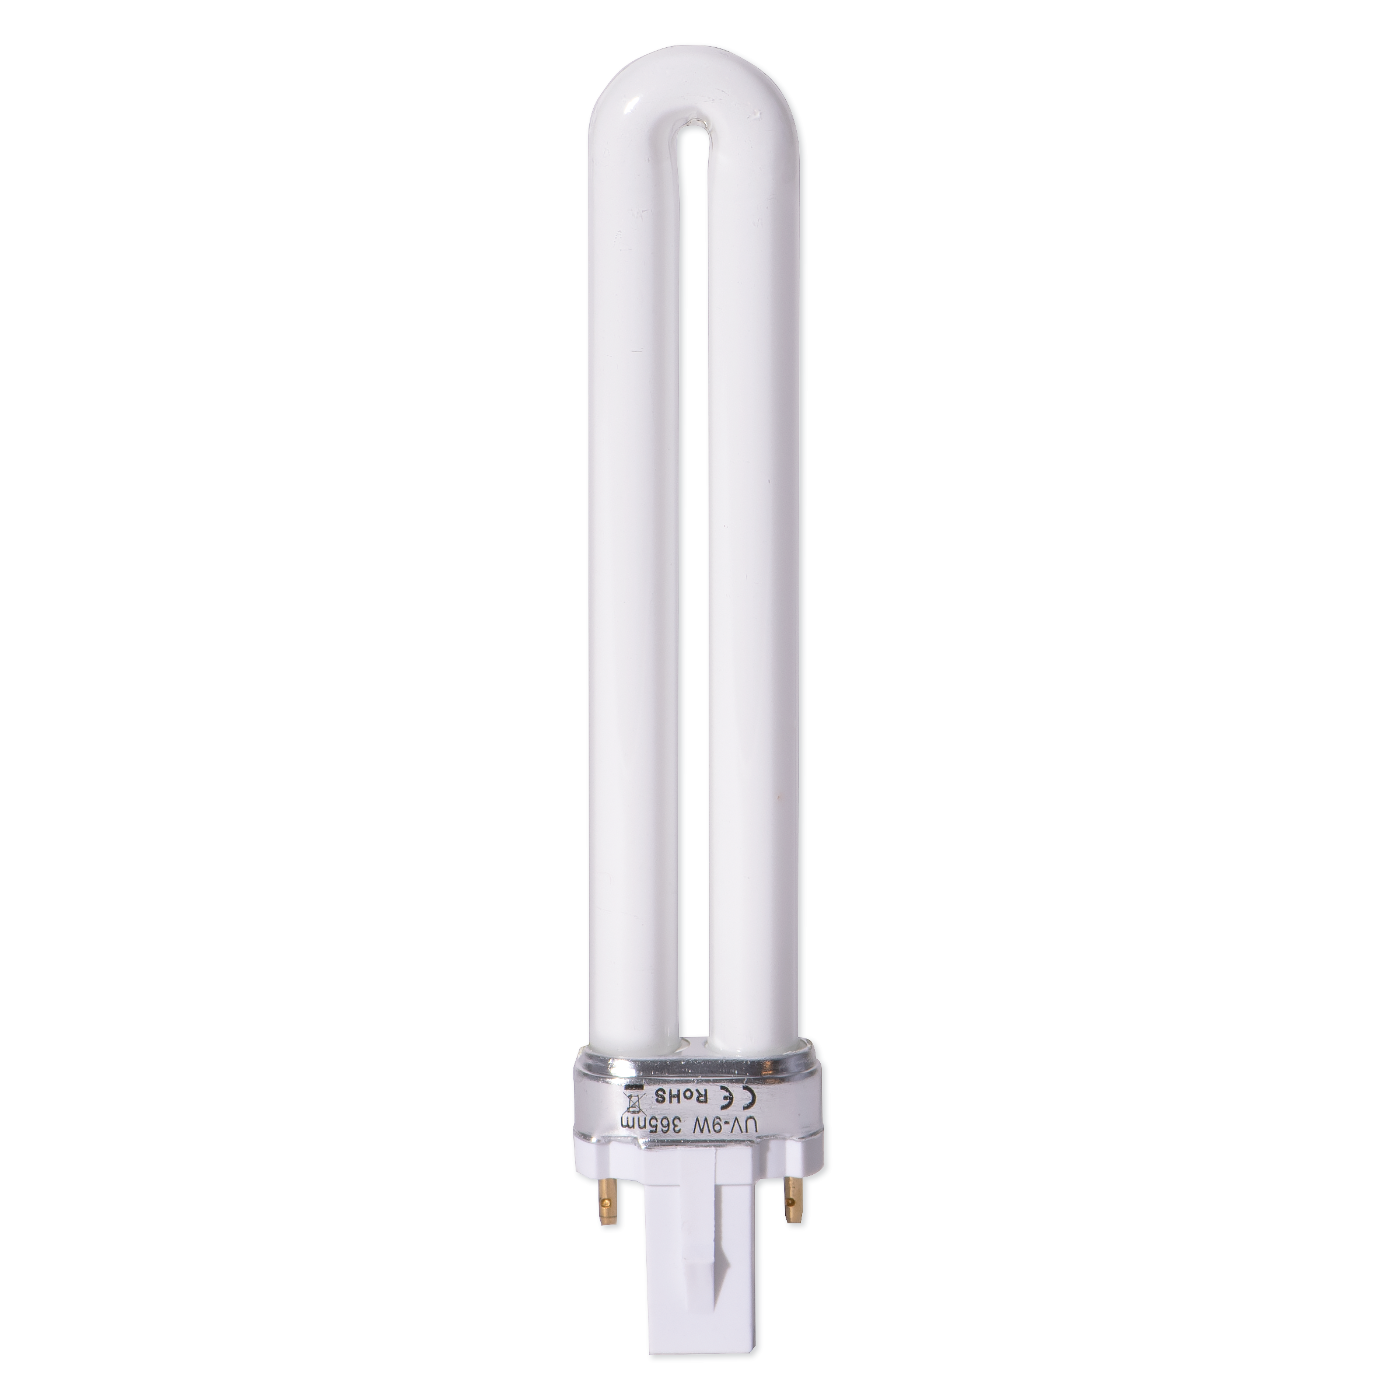 Replacement Bulb for UV Light FSC-945